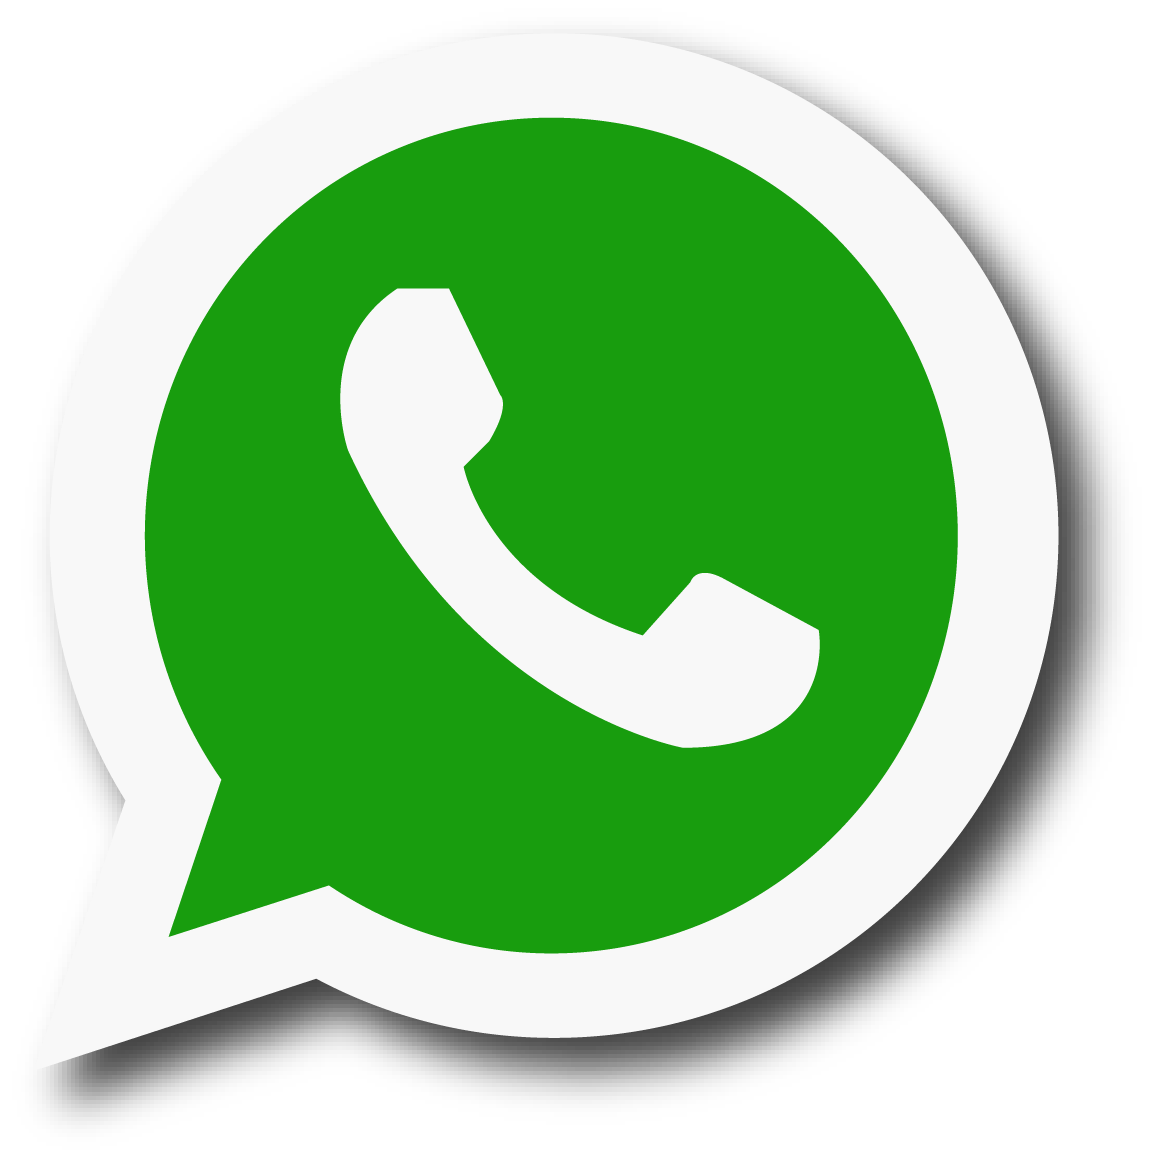 WhatsApp v2 17 265 451913 APK AndroidFreeApks